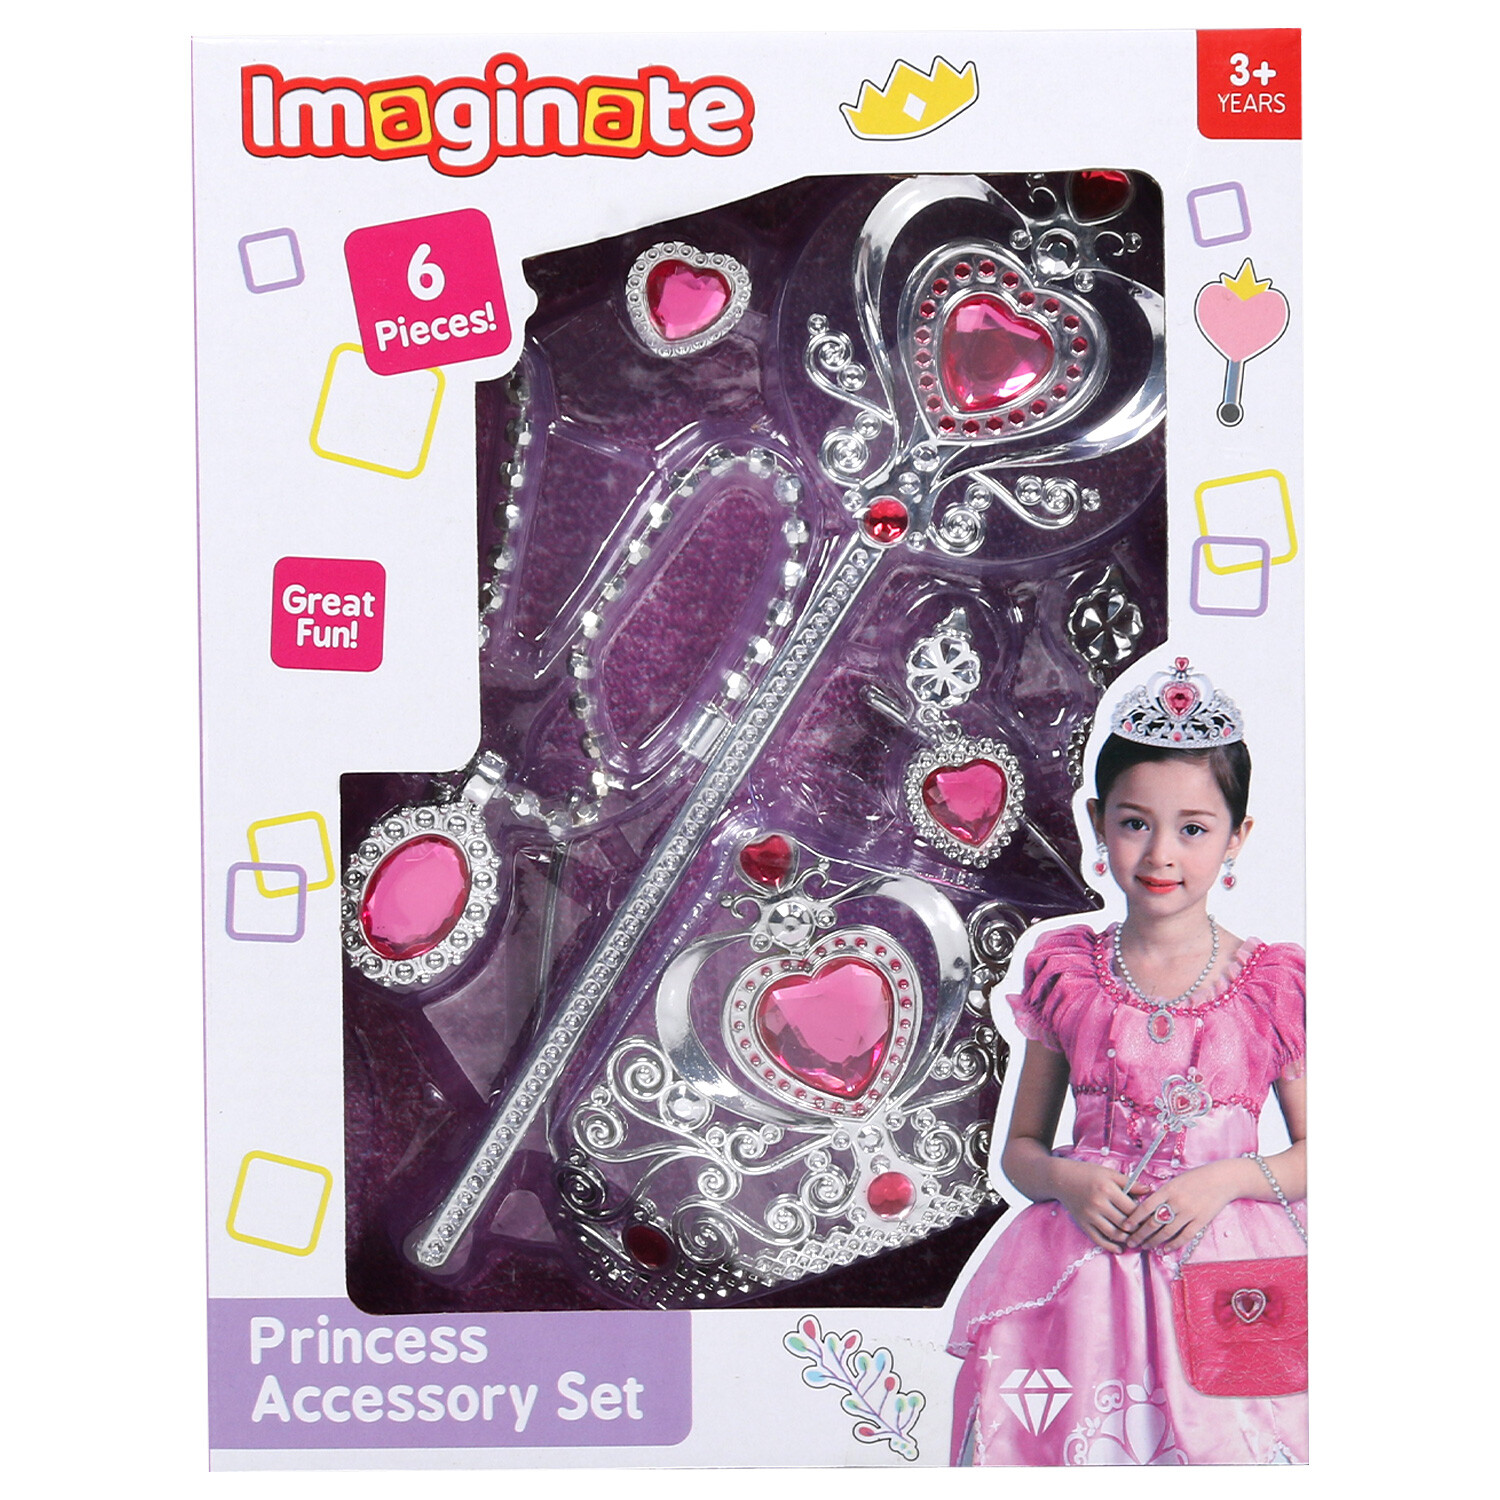 Imaginate 6-Piece Princess Accessory Set - Pink Image